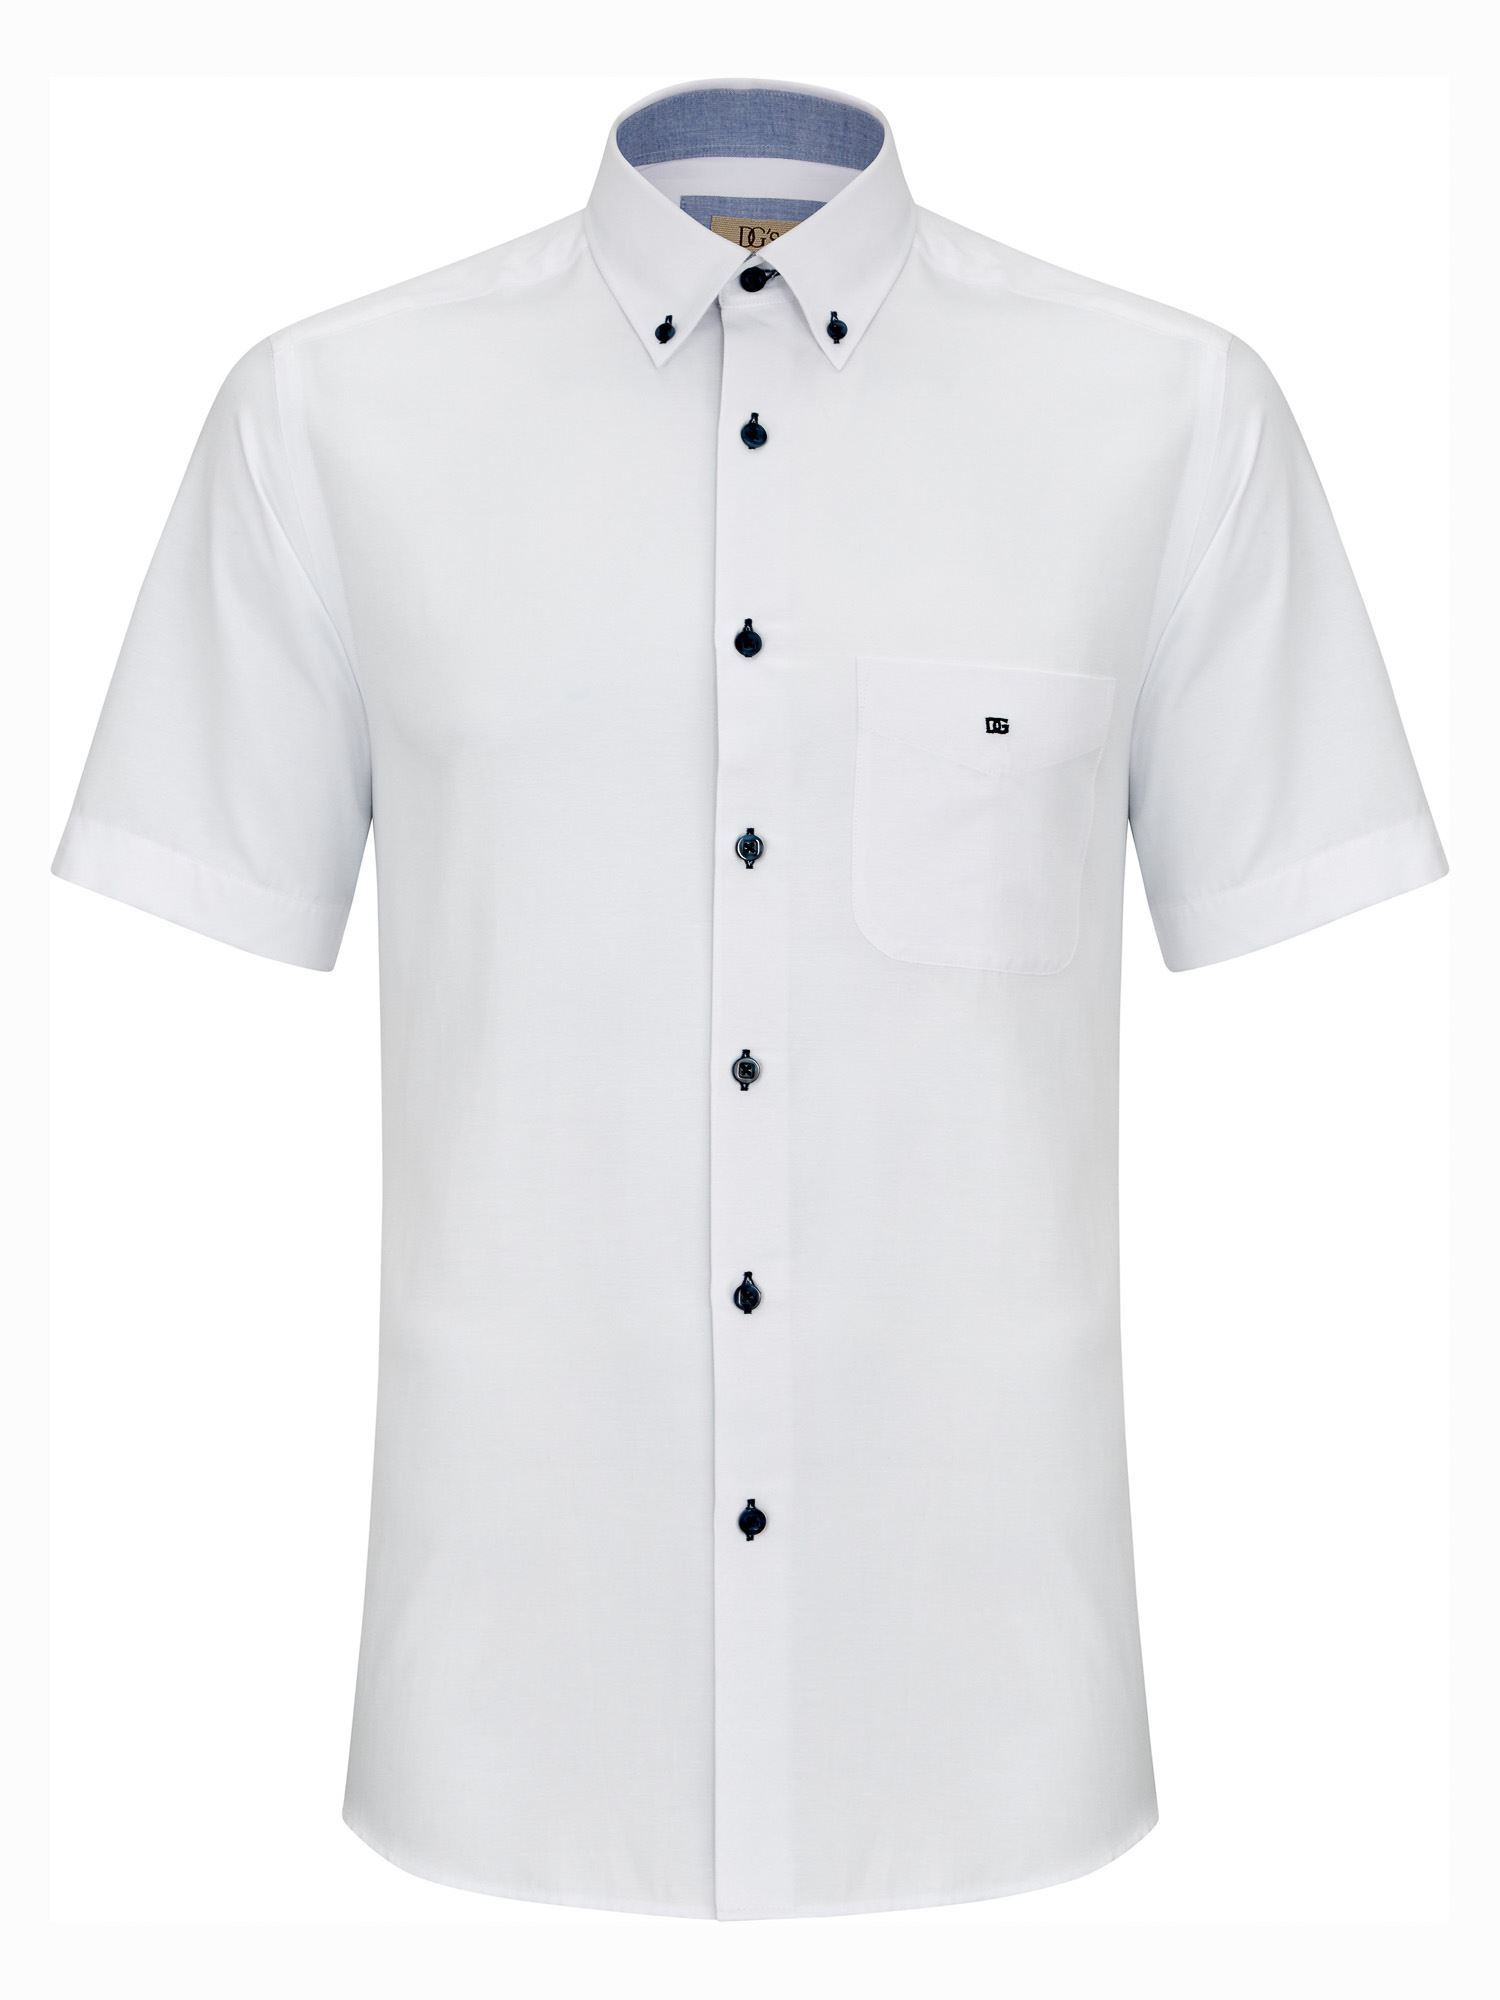 S&T Moore. Daniel Grahame Short Sleeve Drifter Shirt 15178SS